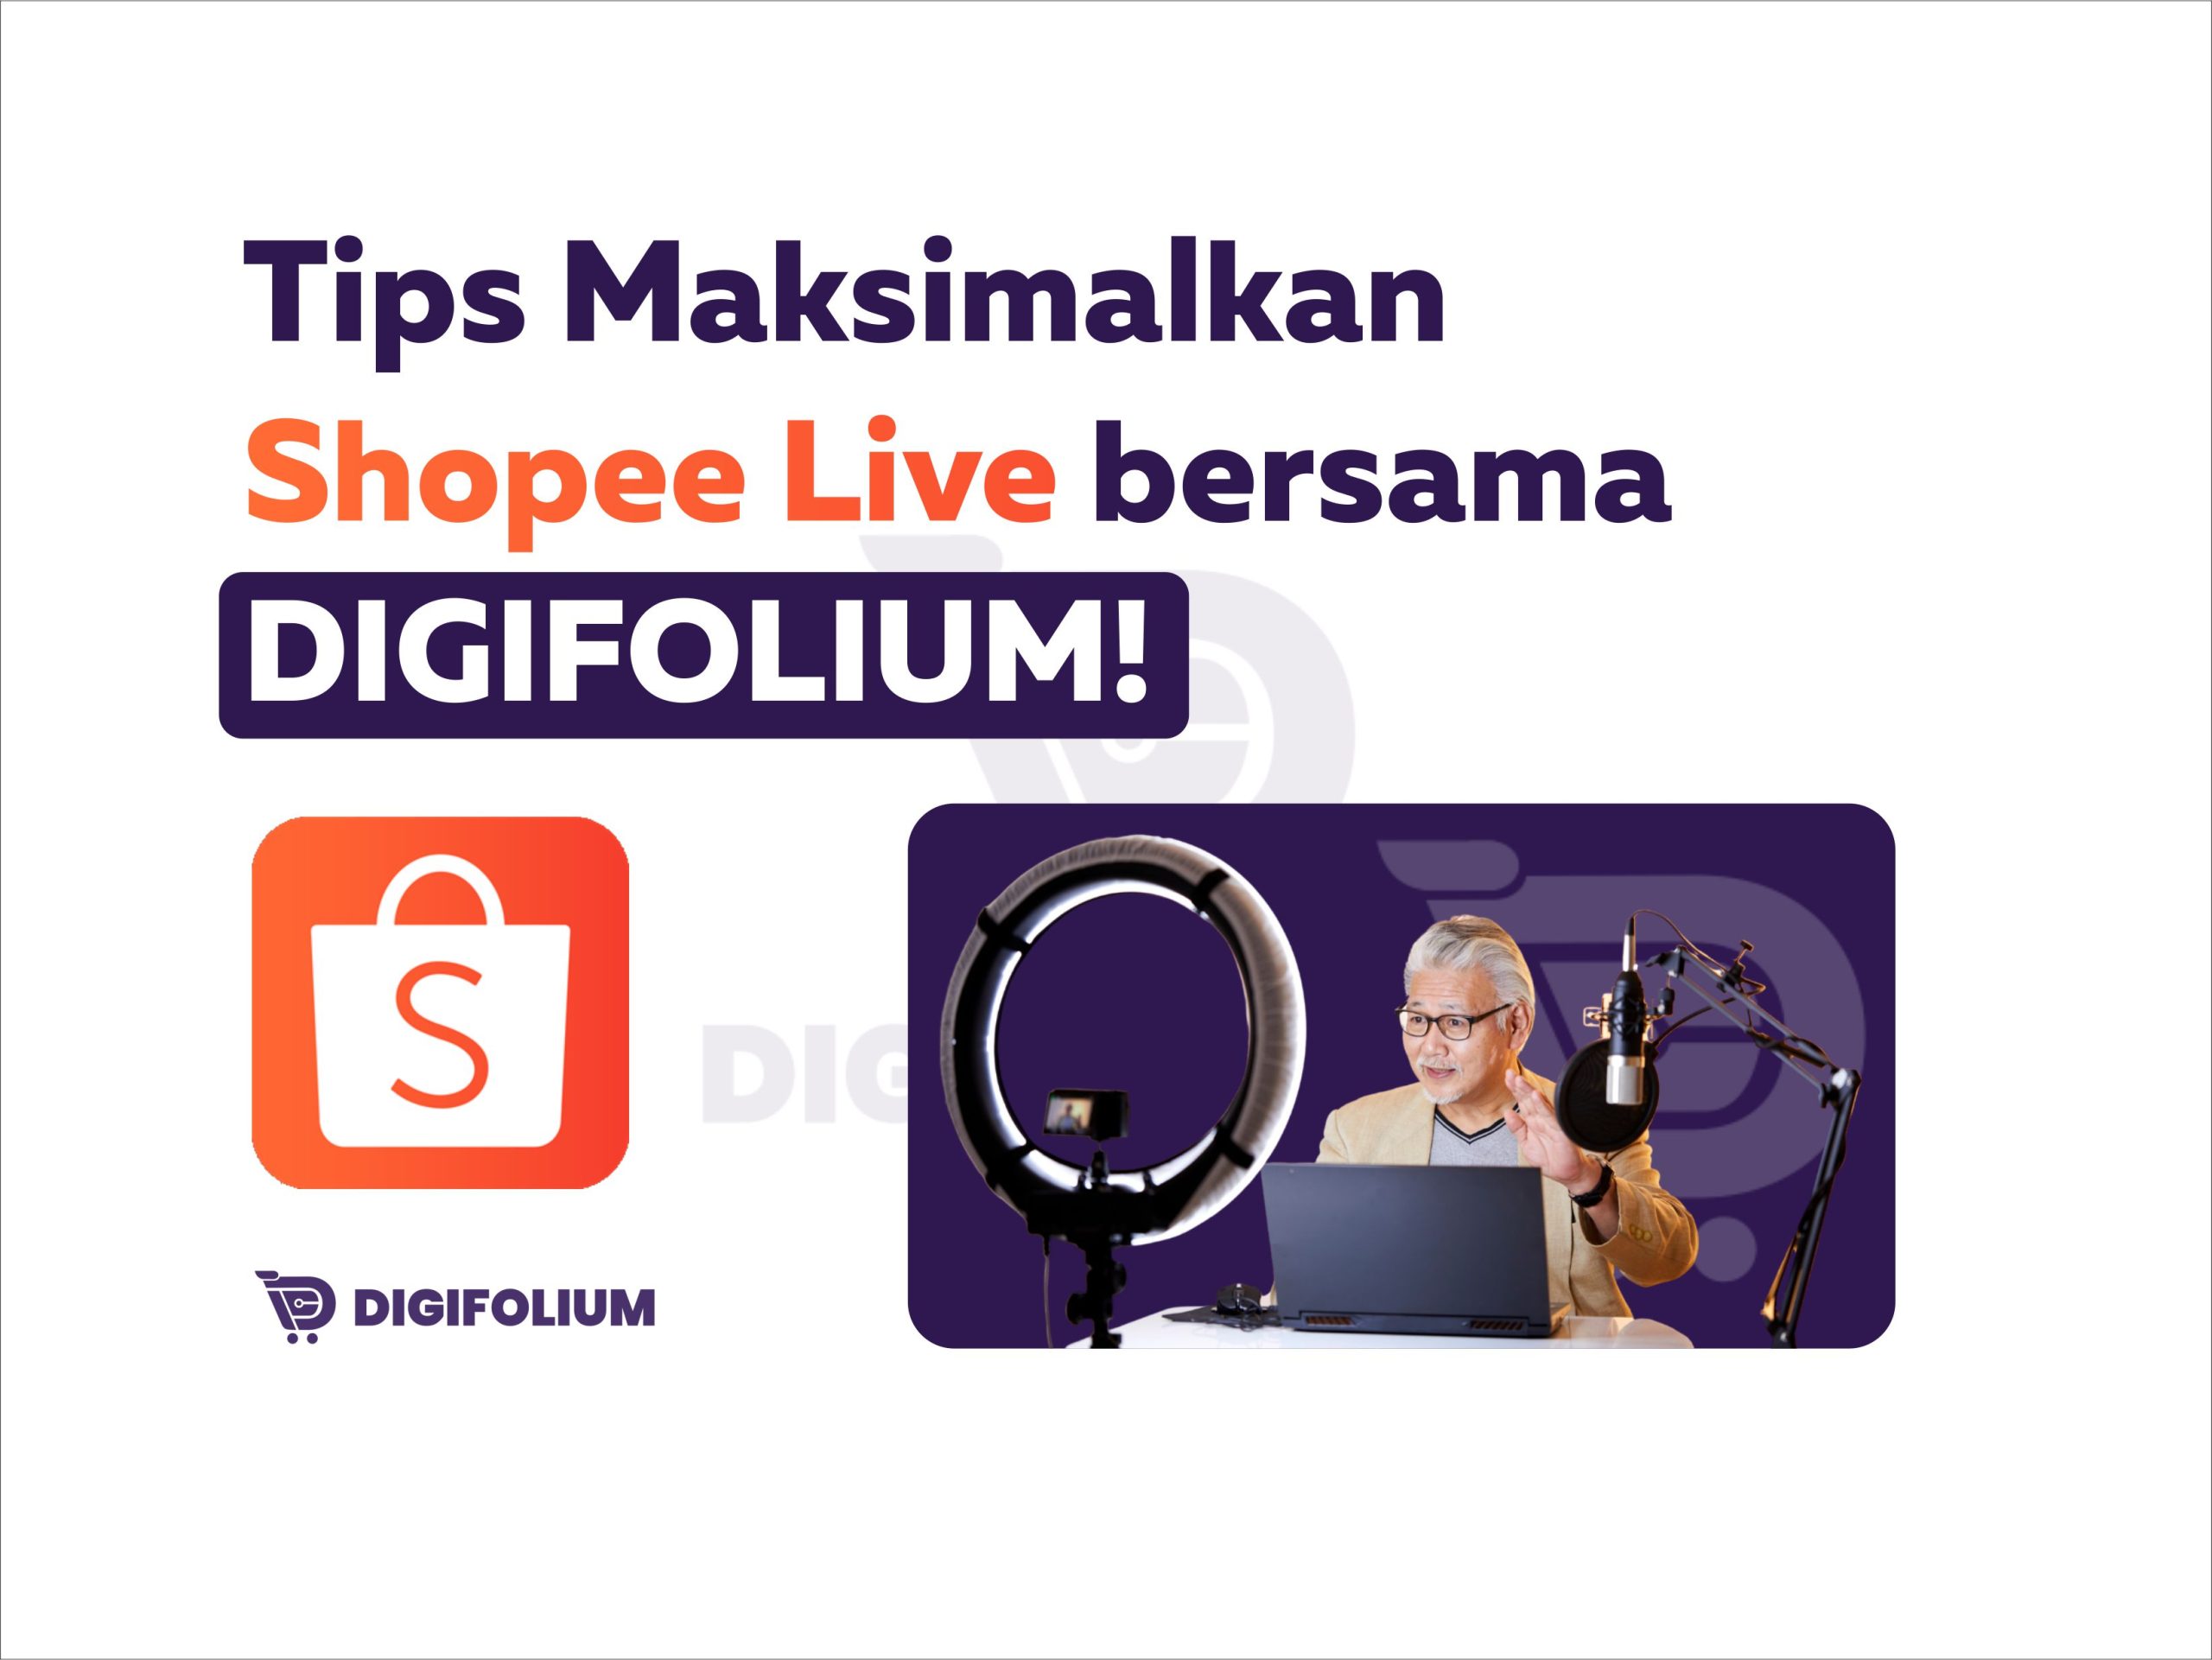 Tips Maksimalkan Shopee Live bersama Digifolium